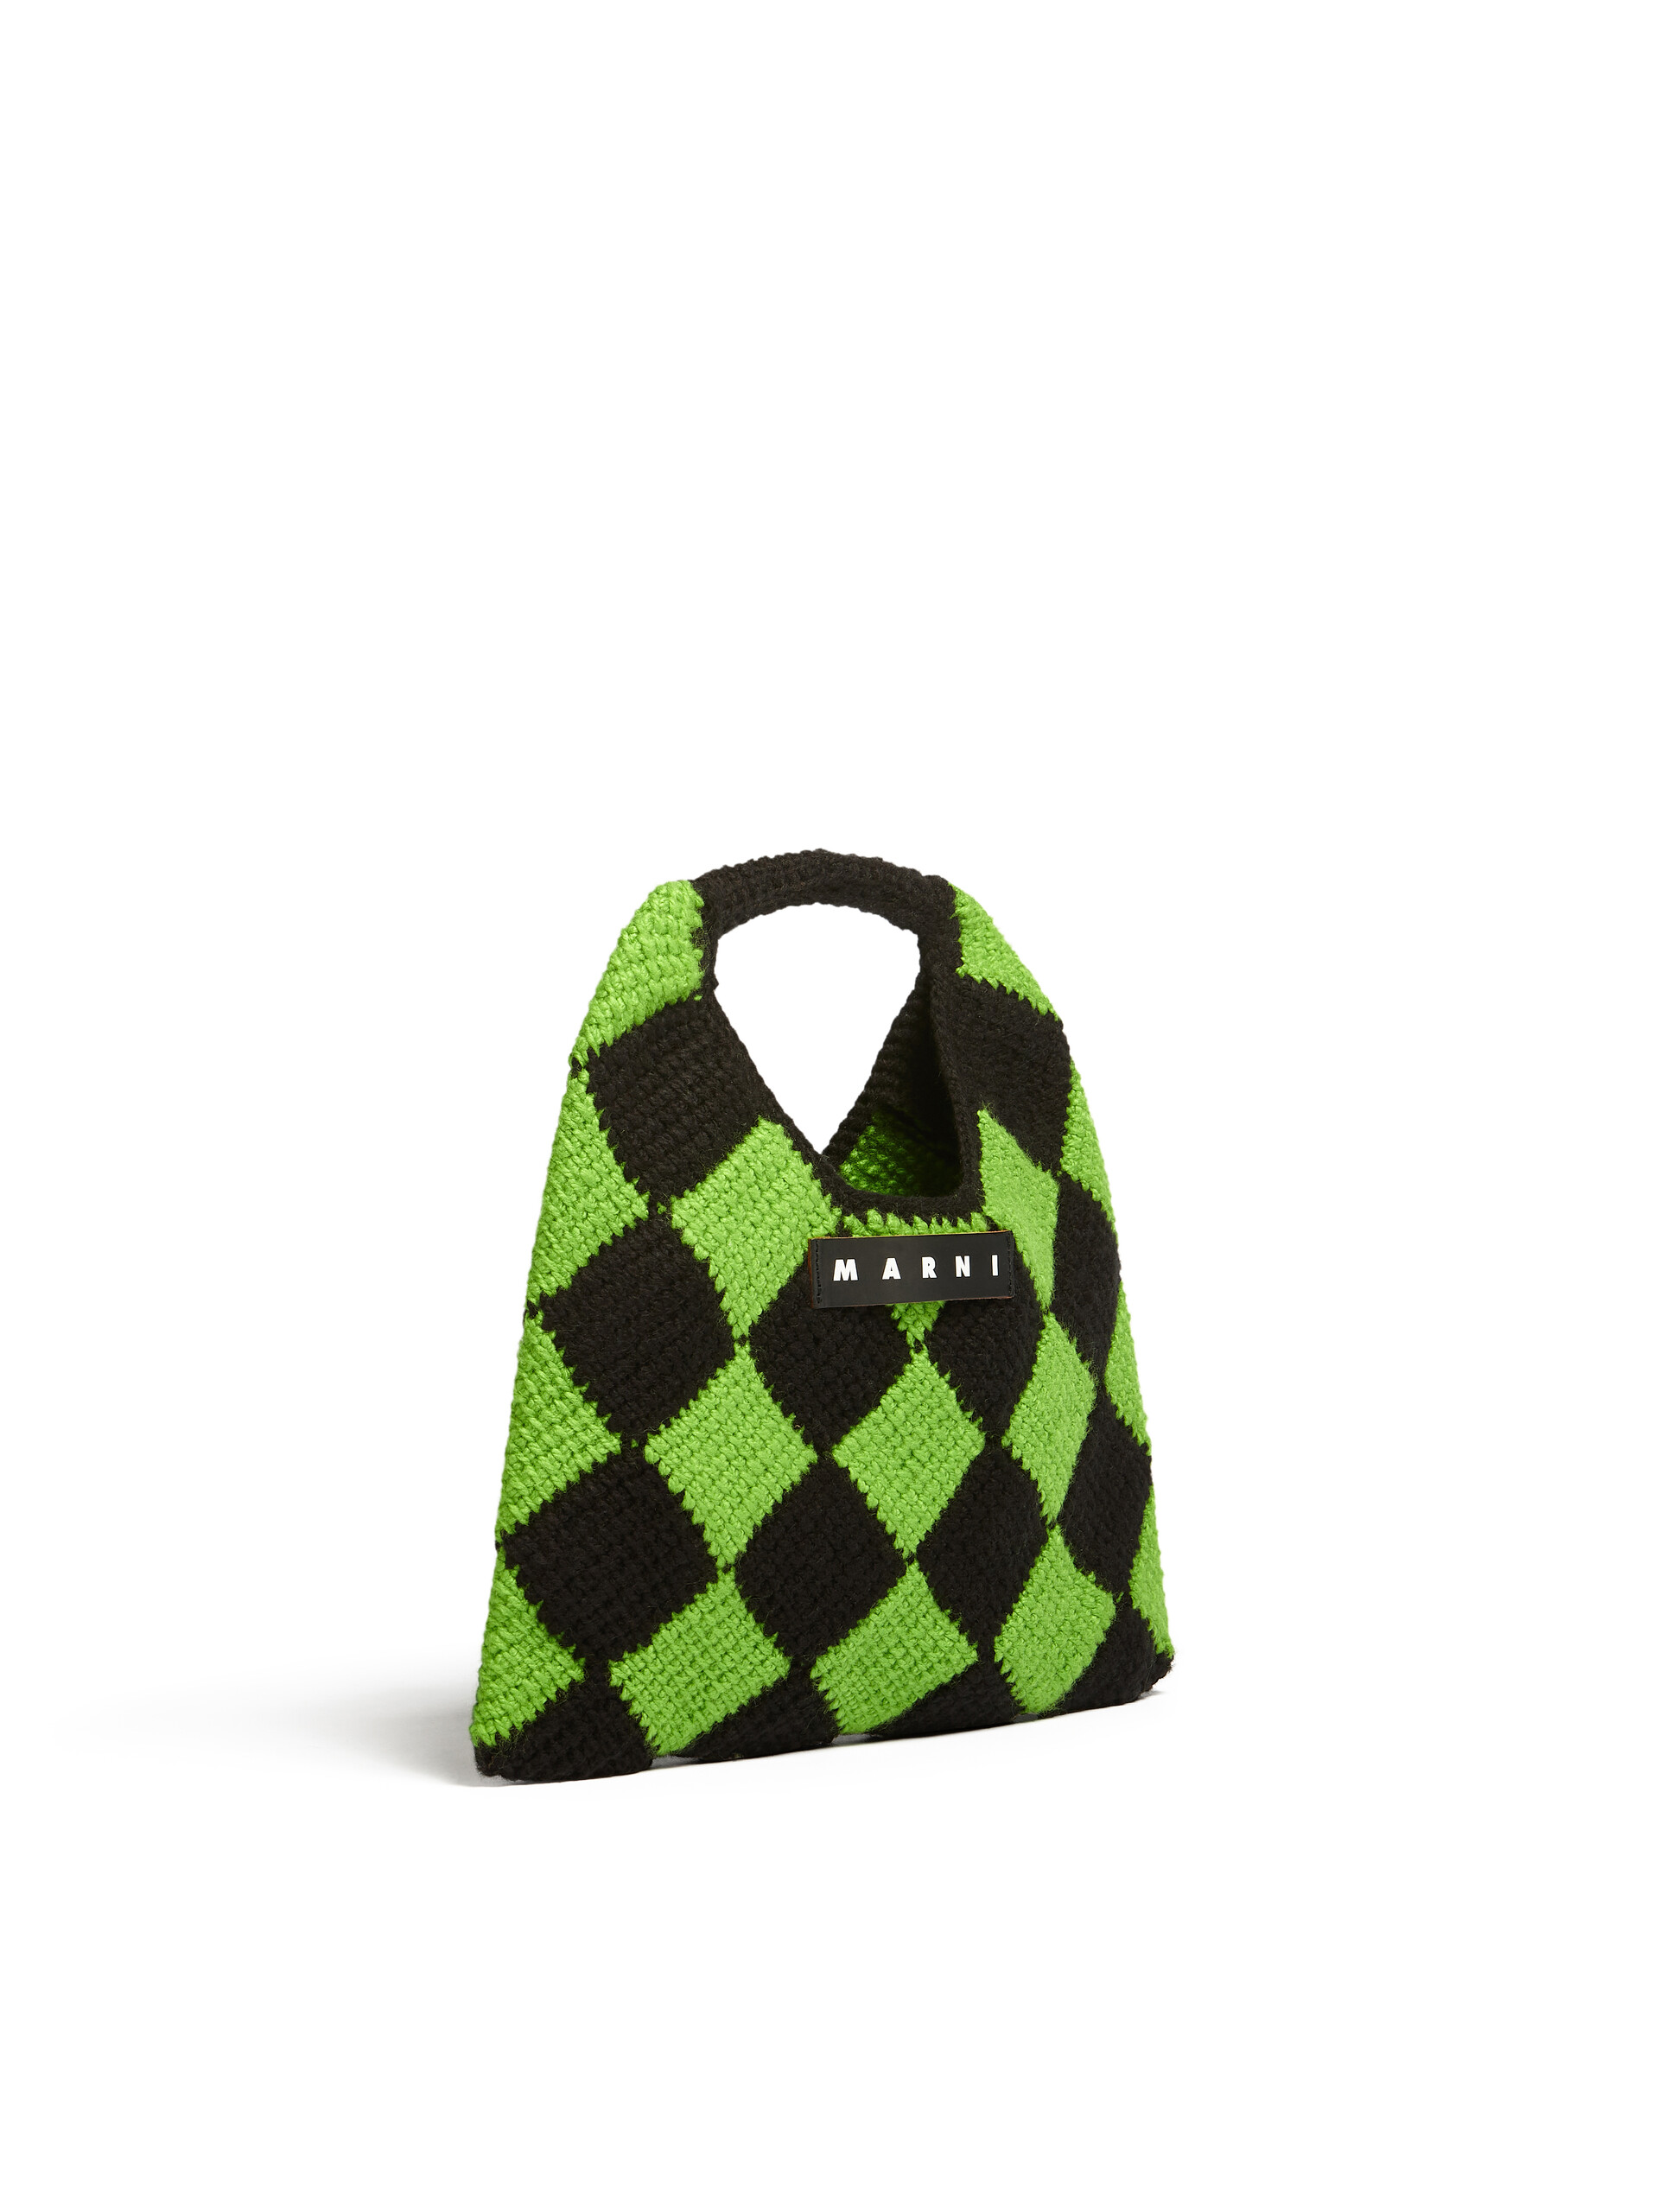 MARNI MARKET DIAMOND medium bag in green and black tech wool - Bags - Image 2